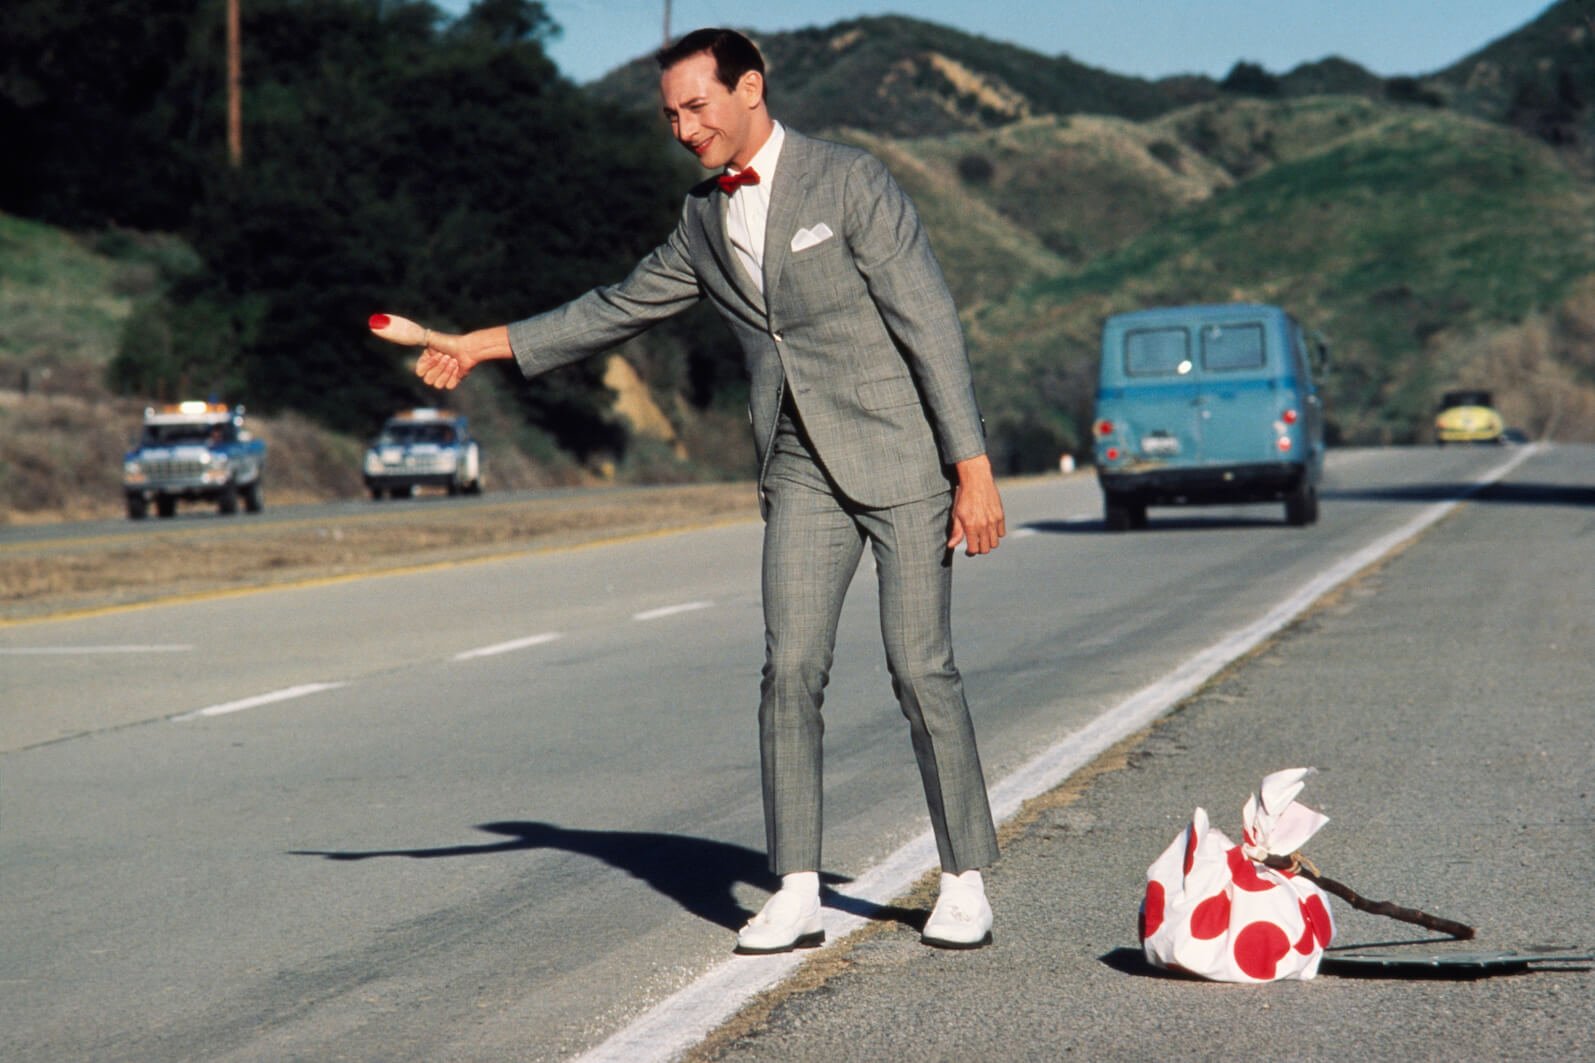 Paul Reubens as Pee-wee Herman trying to hitchhike